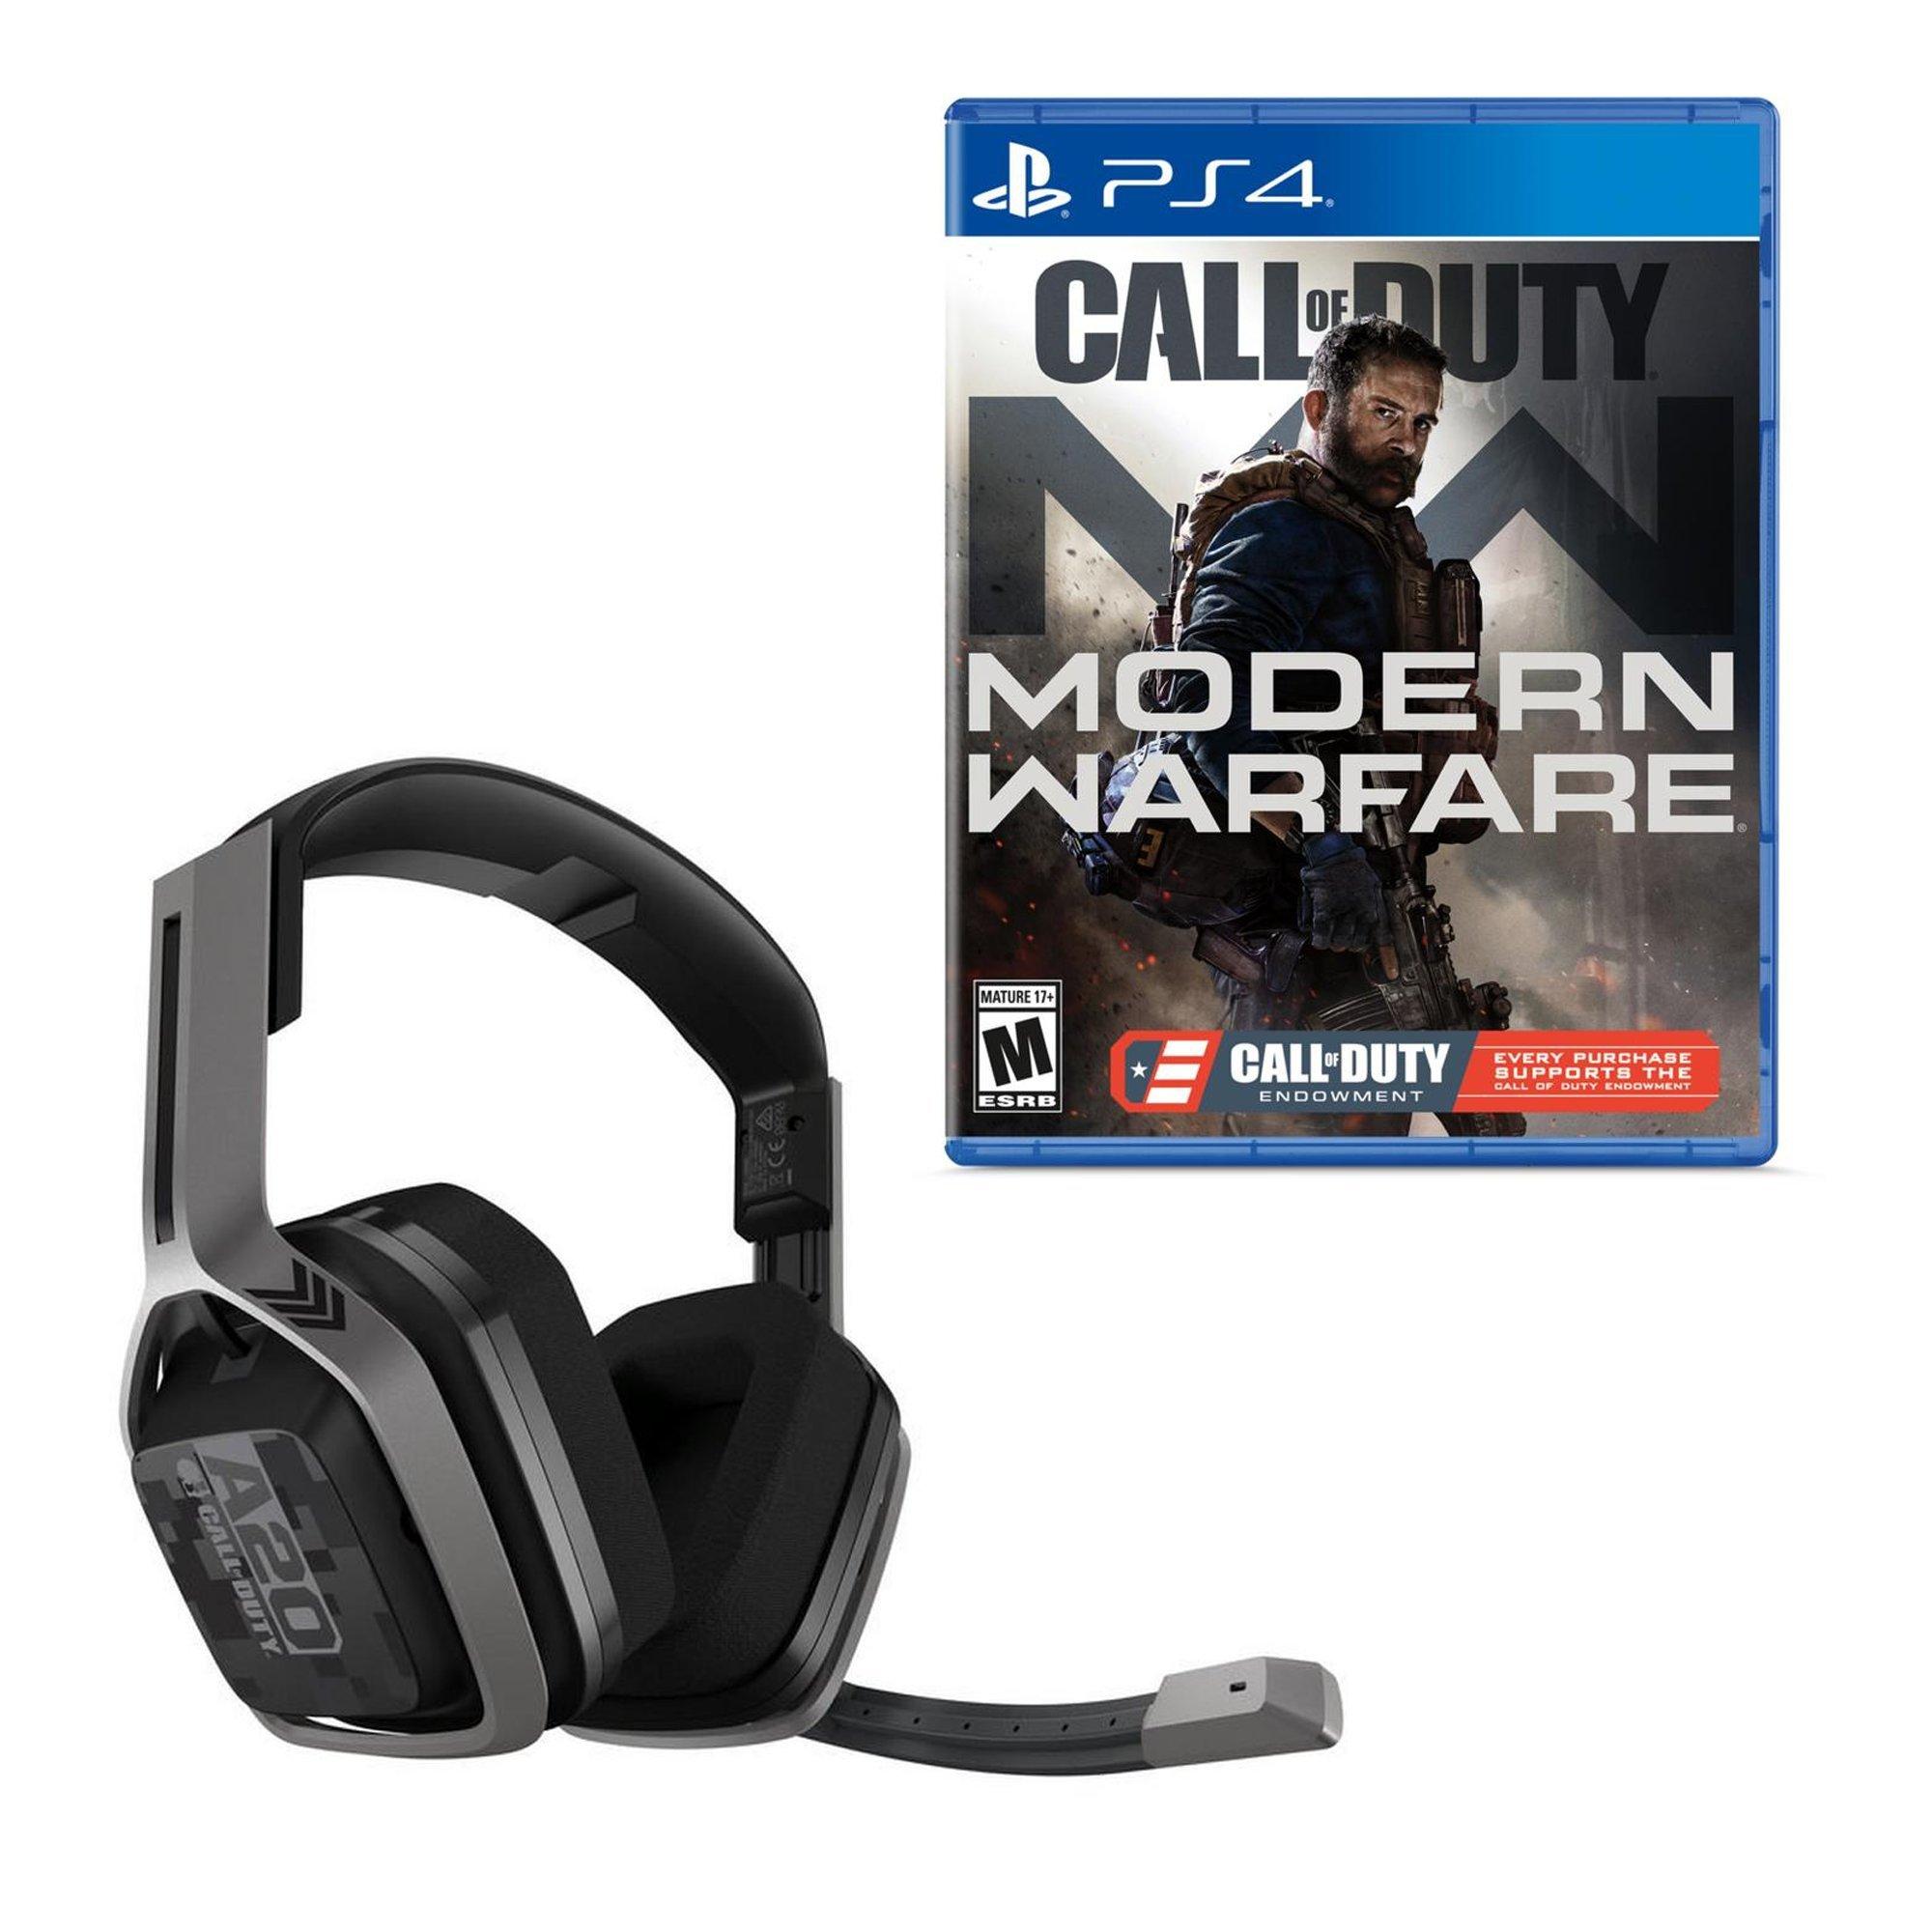 Call of Duty Modern Warfare C.O.D.E Edition with ASTRO A20 ... - 